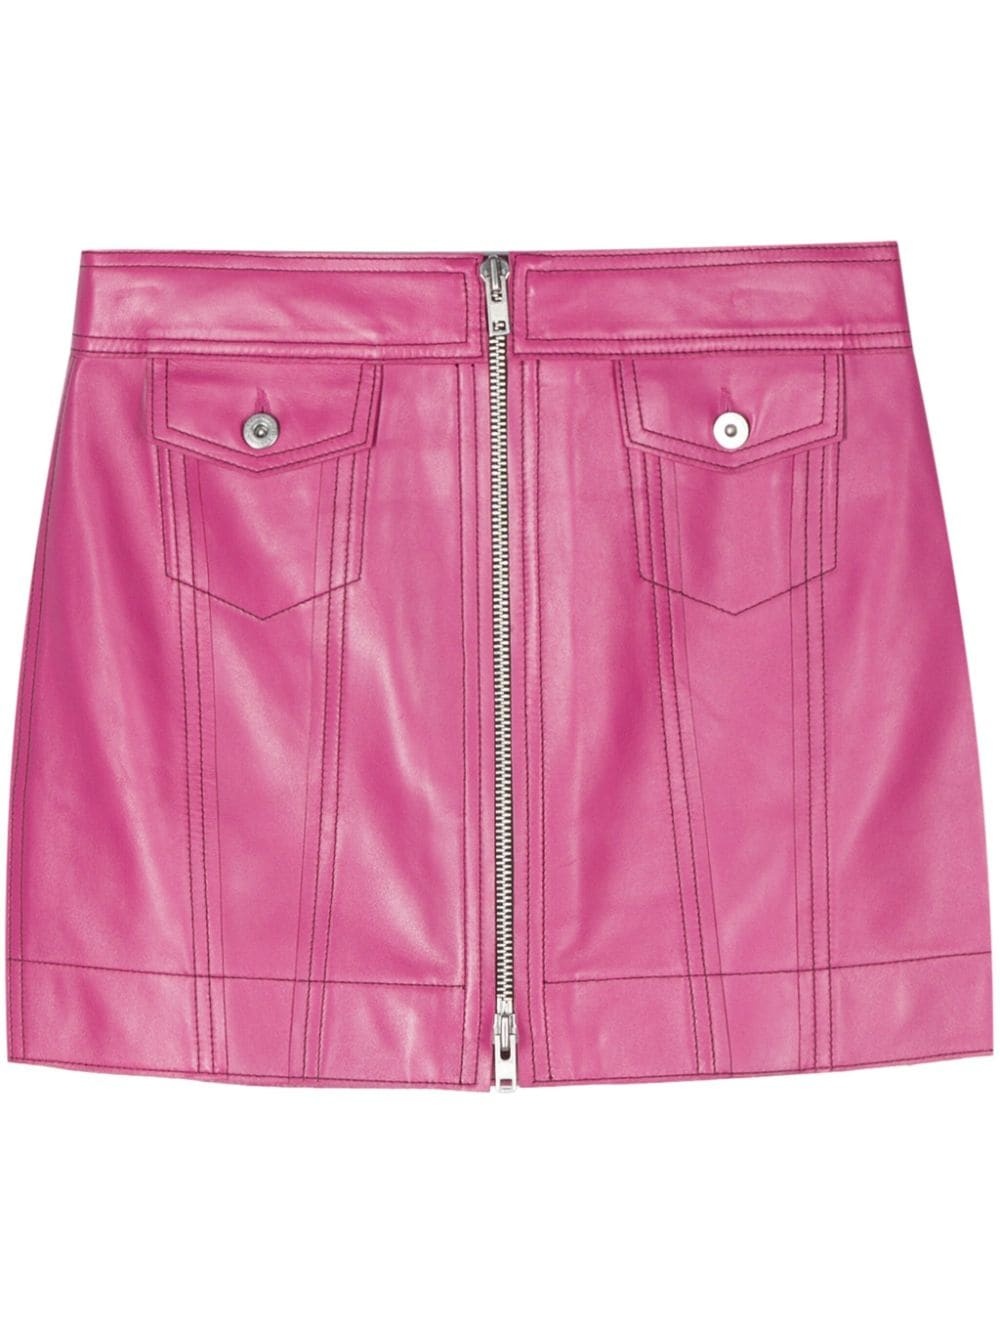 Kaelyn leather skirt - 1